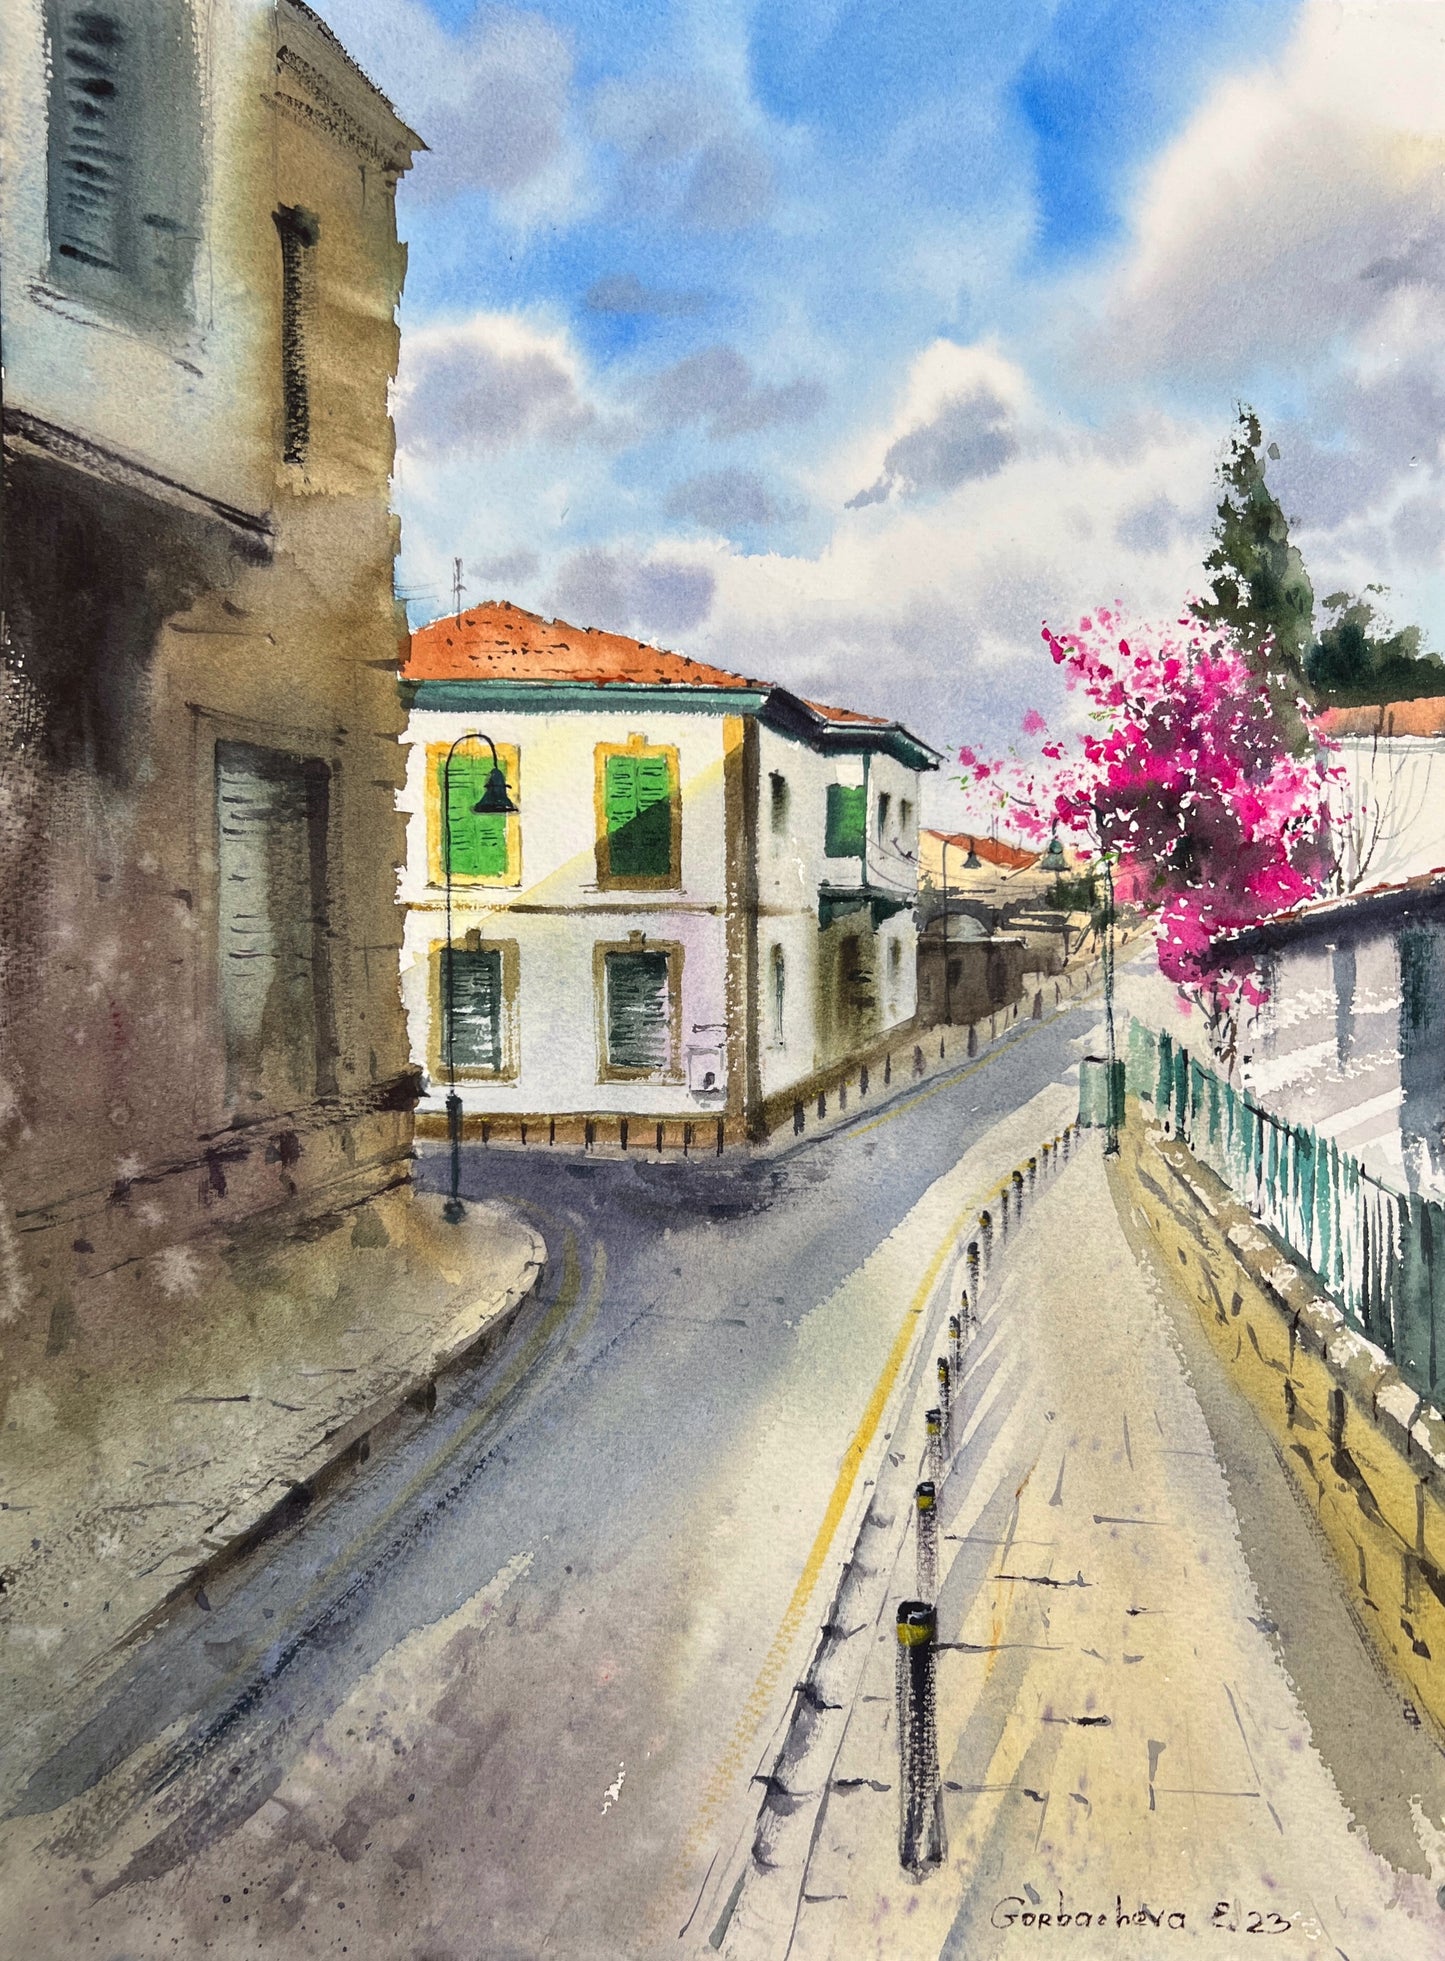 Nicosia Painting Original Watercolor , Cyprus City Artwork, Street Scene, Mediterranean Wall Art, Travel Gift for Her